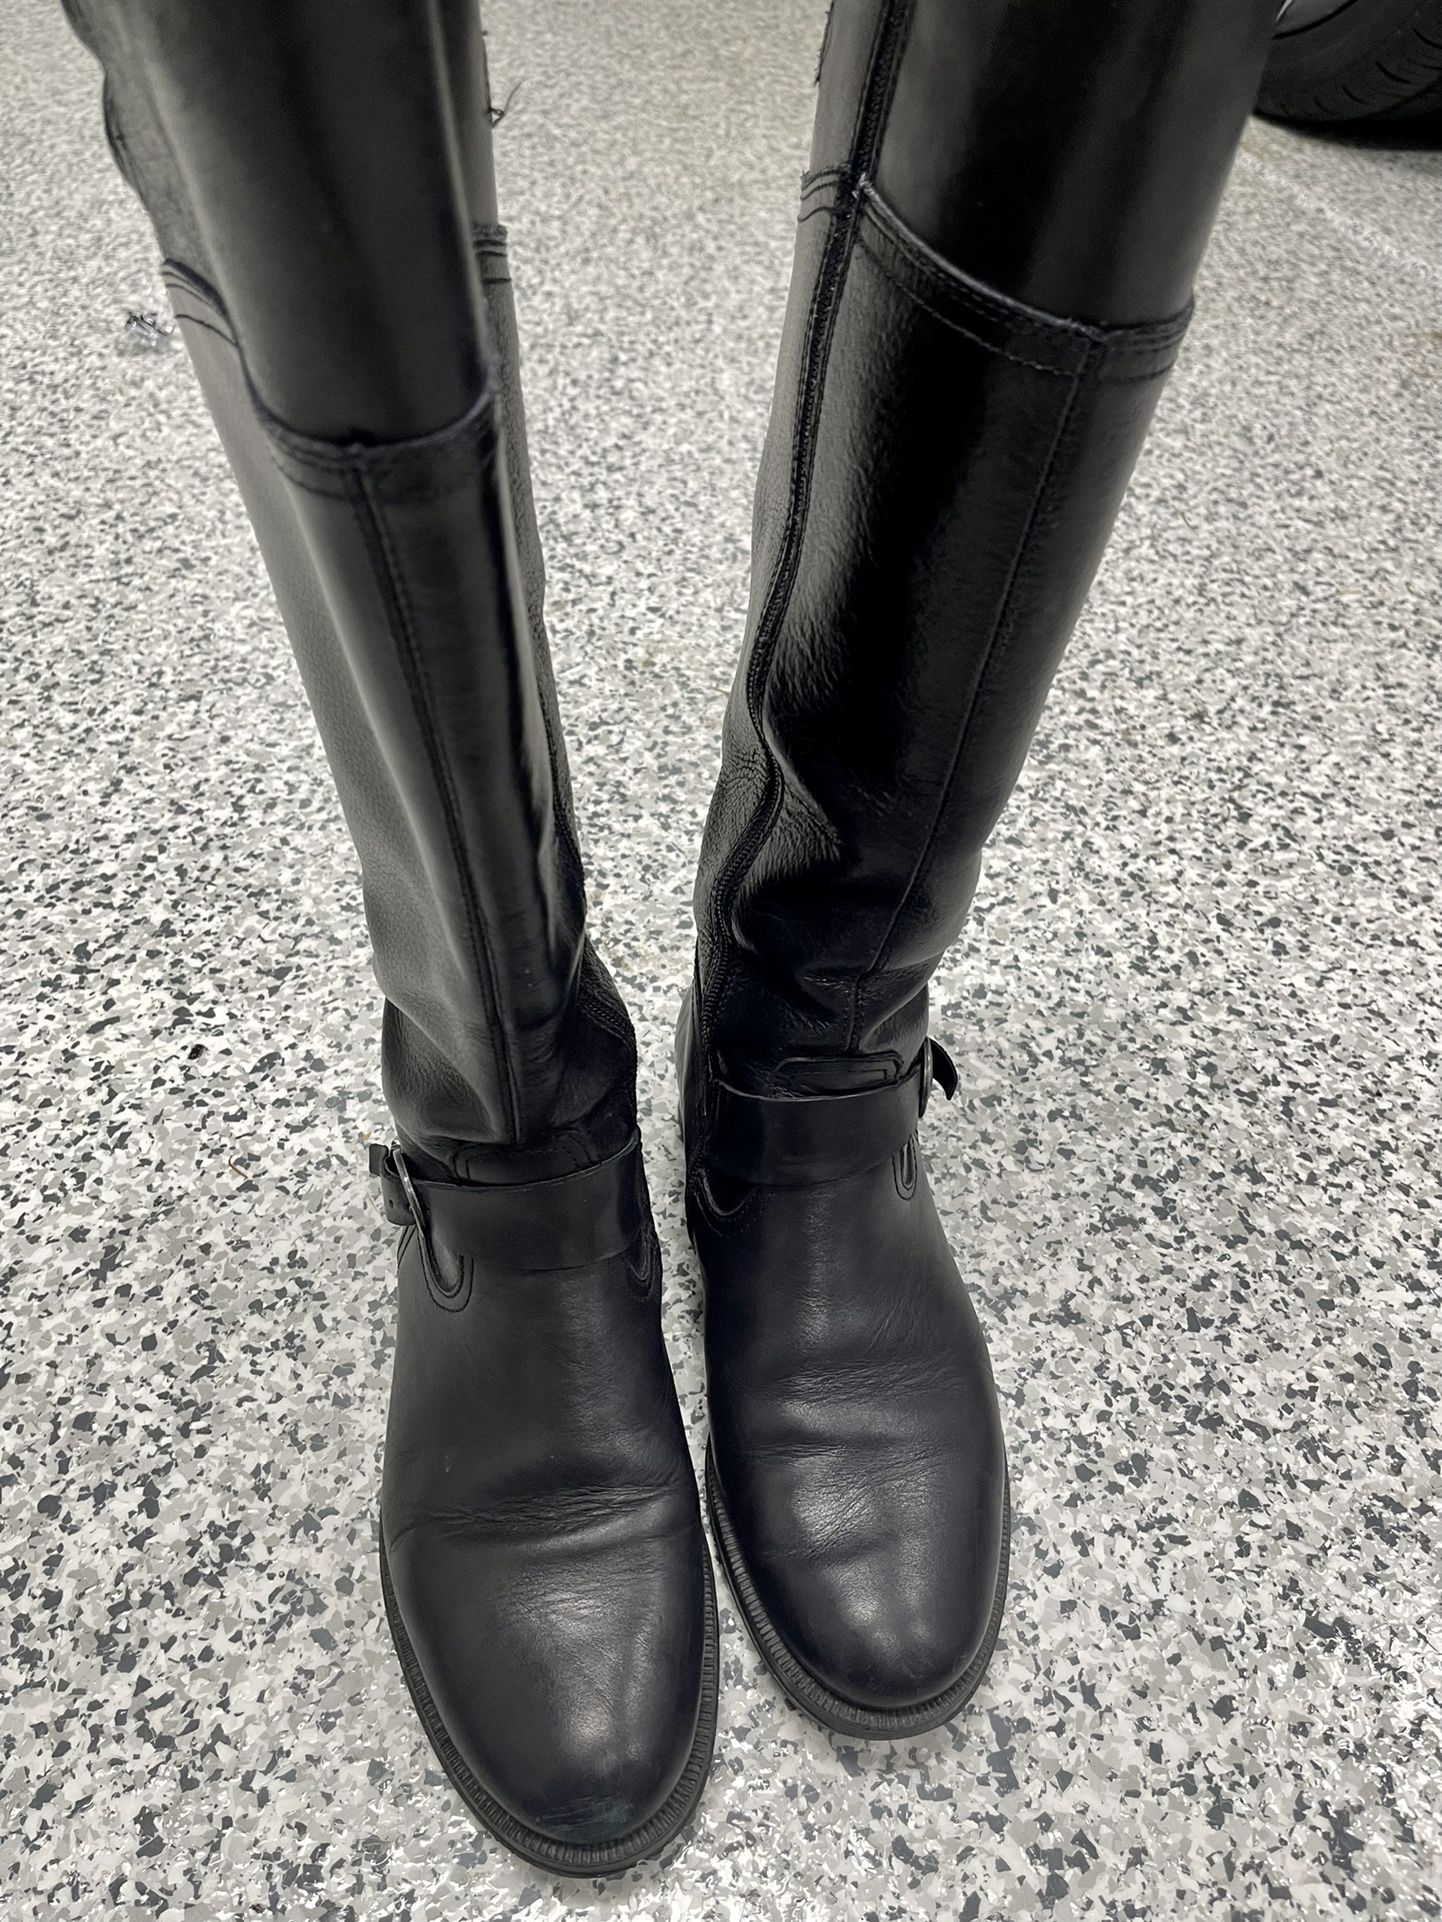 Aldo Leather Women Boots Size 38